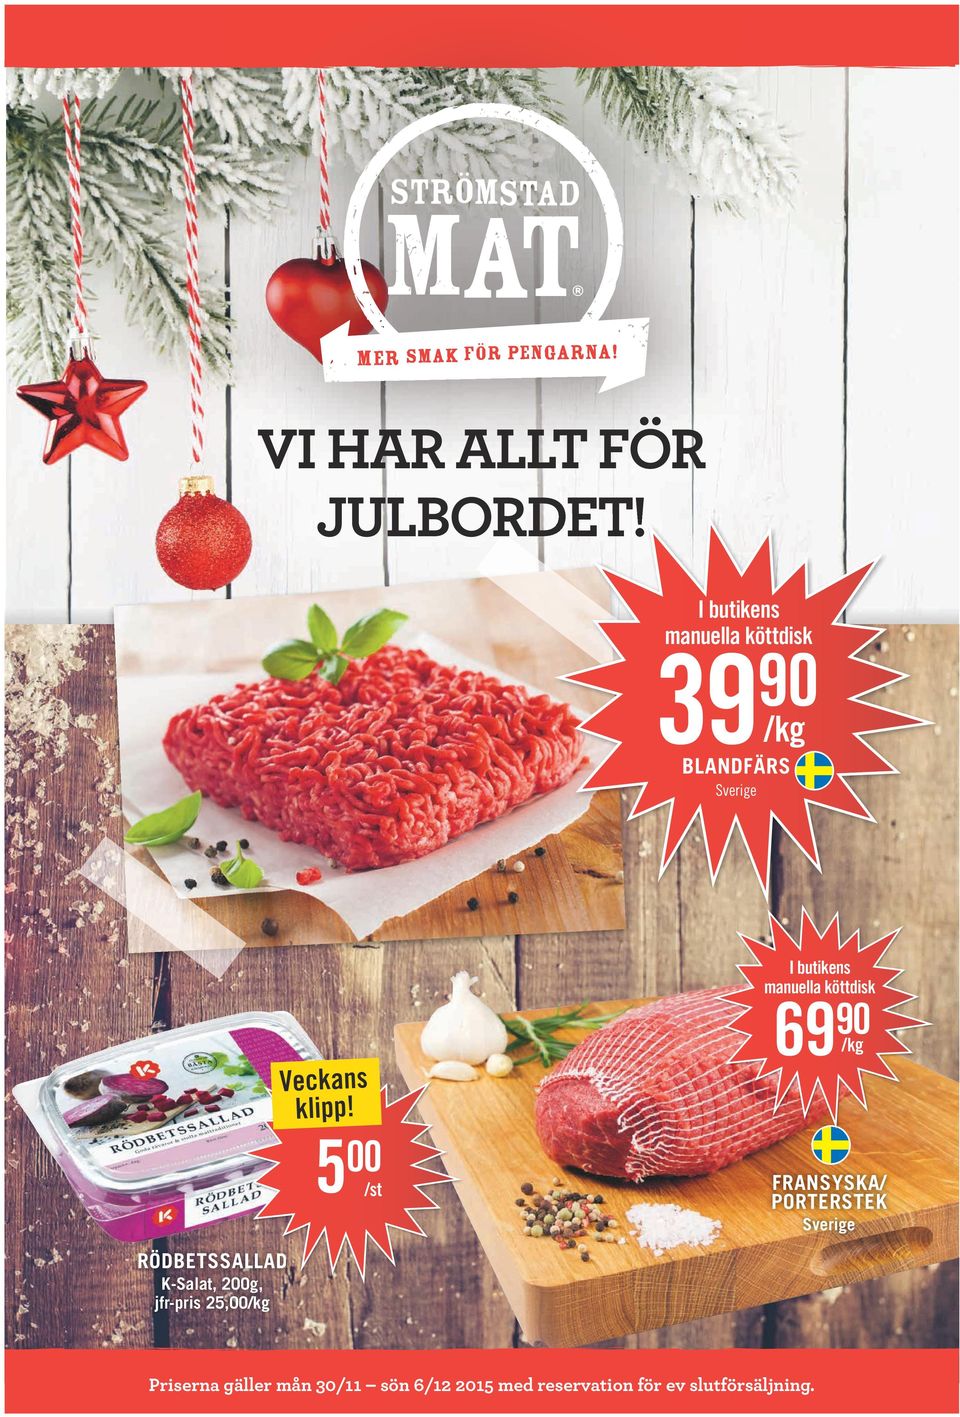 5 I butikens manuella köttdisk 69 90 /kg FRANSYSKA/ PORTERSTEK Sverige